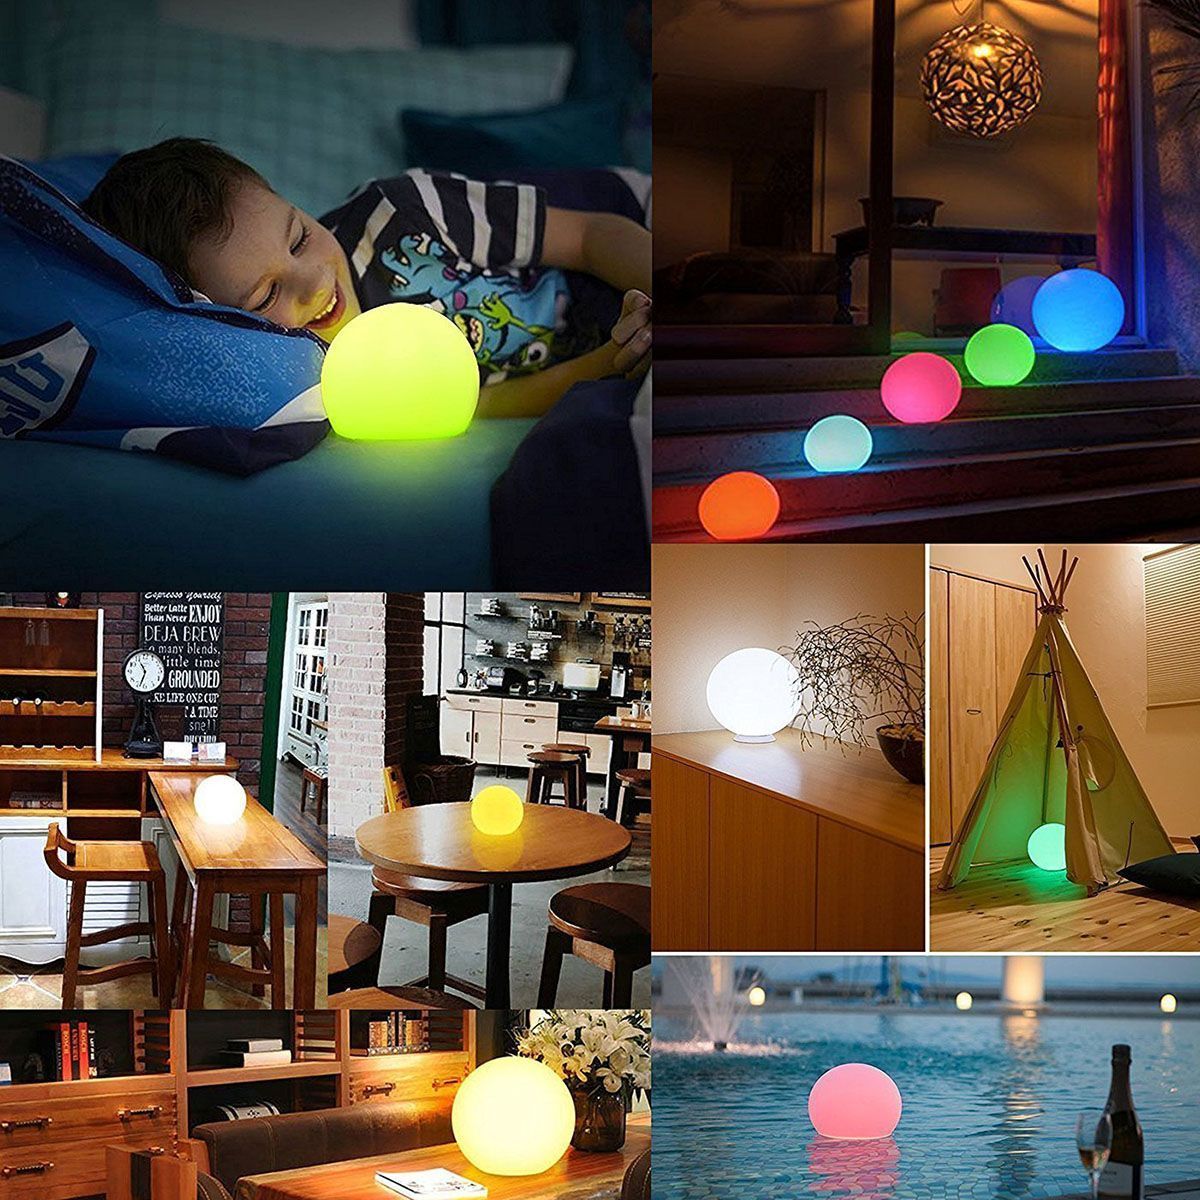 3D-Acrylic-Night-Light-7-Color-LED-Lamp-Base-Panels-DIY-Remote-Control-USB-1638368